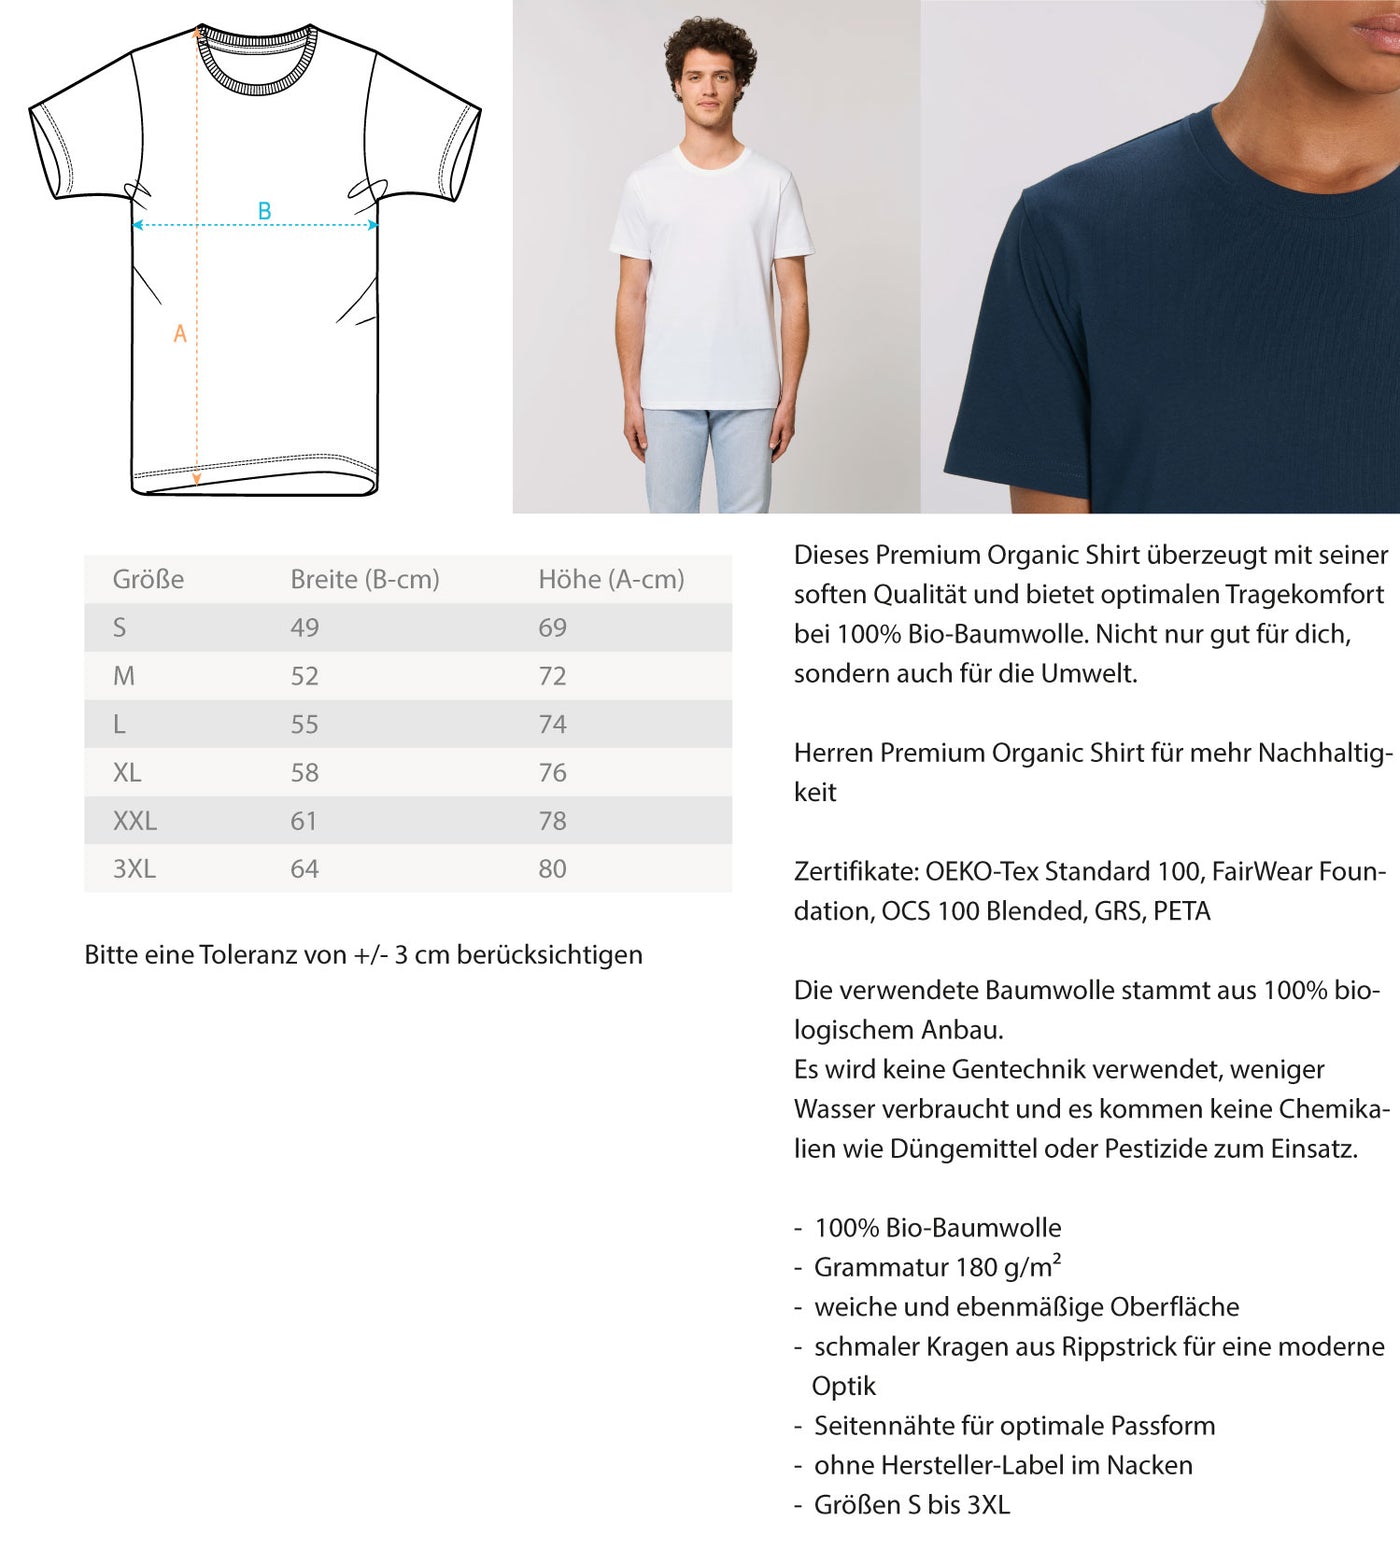 Zum Downhill geboren - Herren Premium Organic T-Shirt